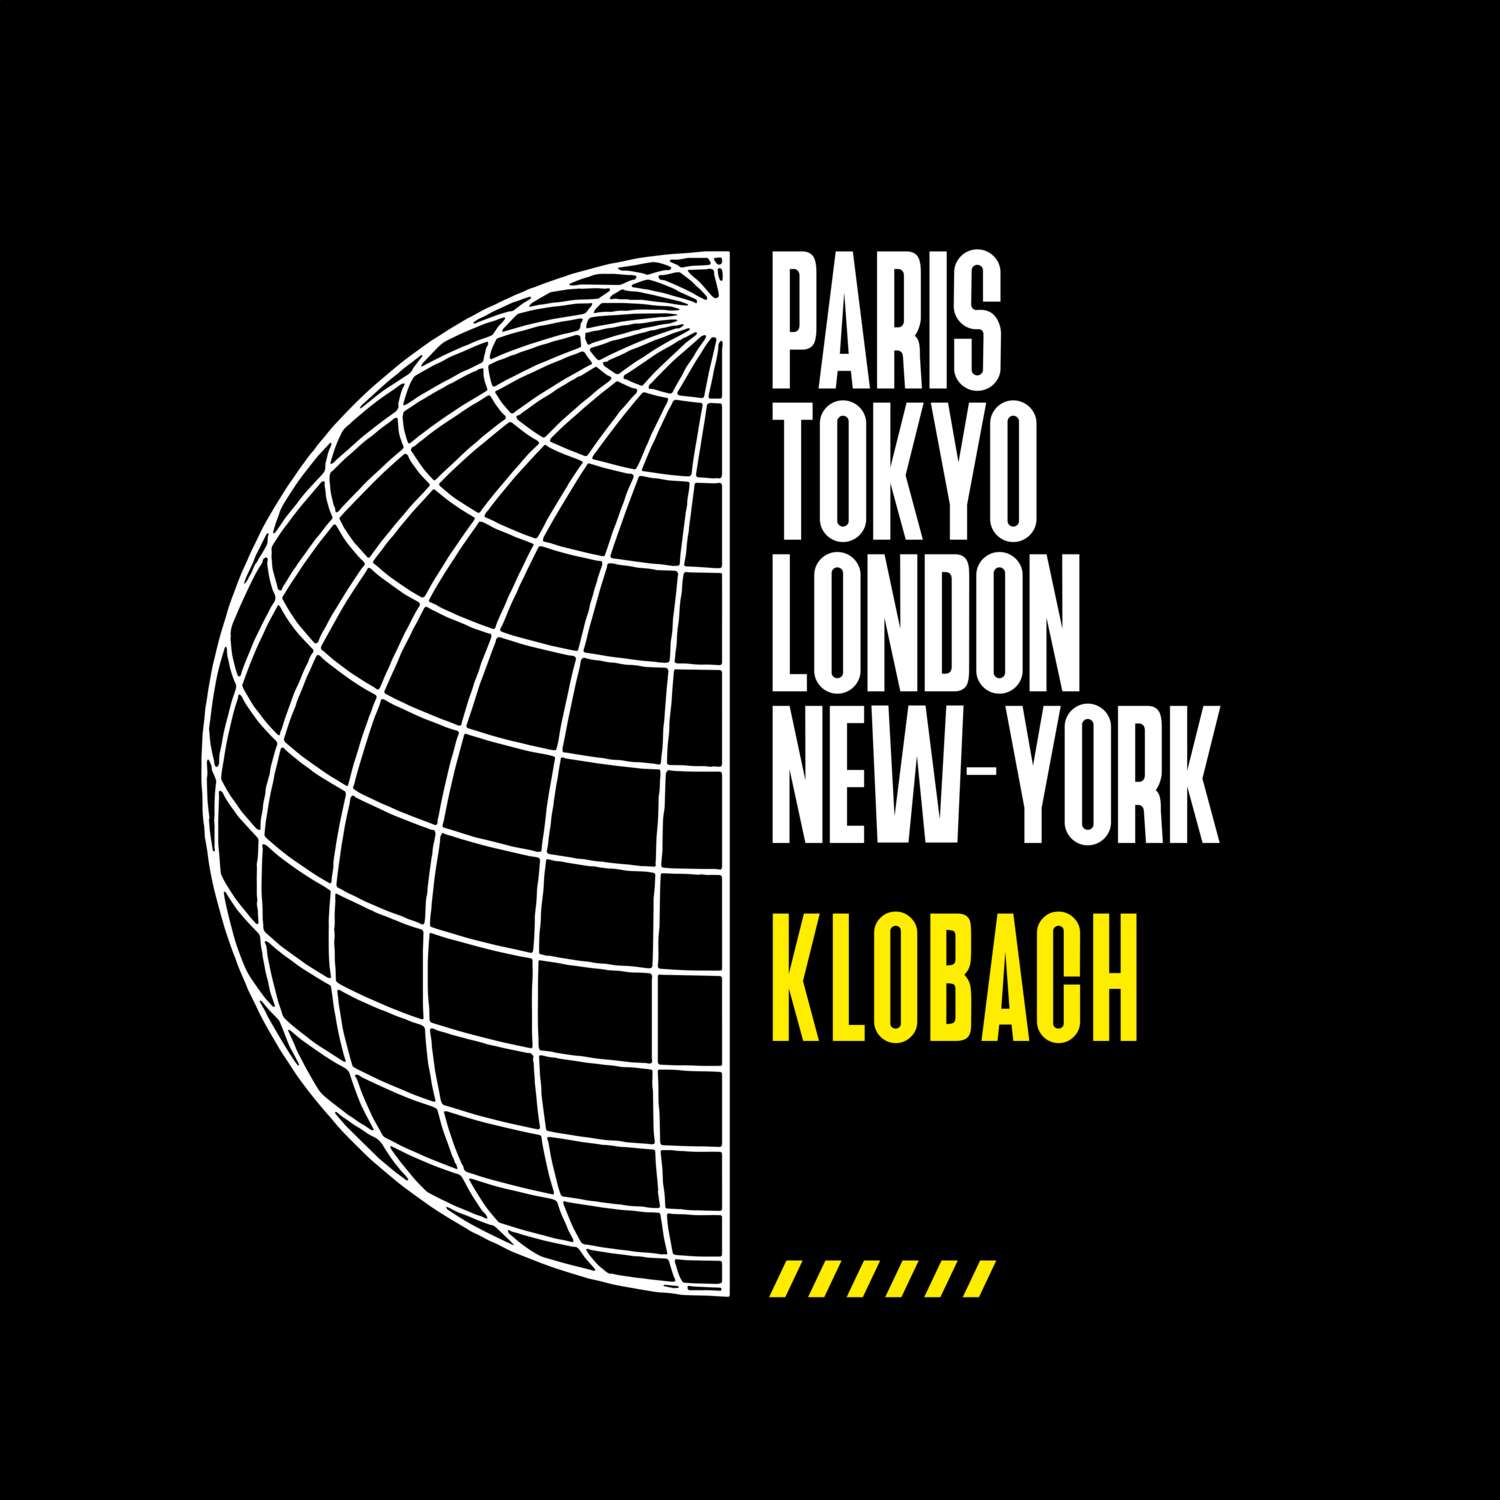 Klobach T-Shirt »Paris Tokyo London«